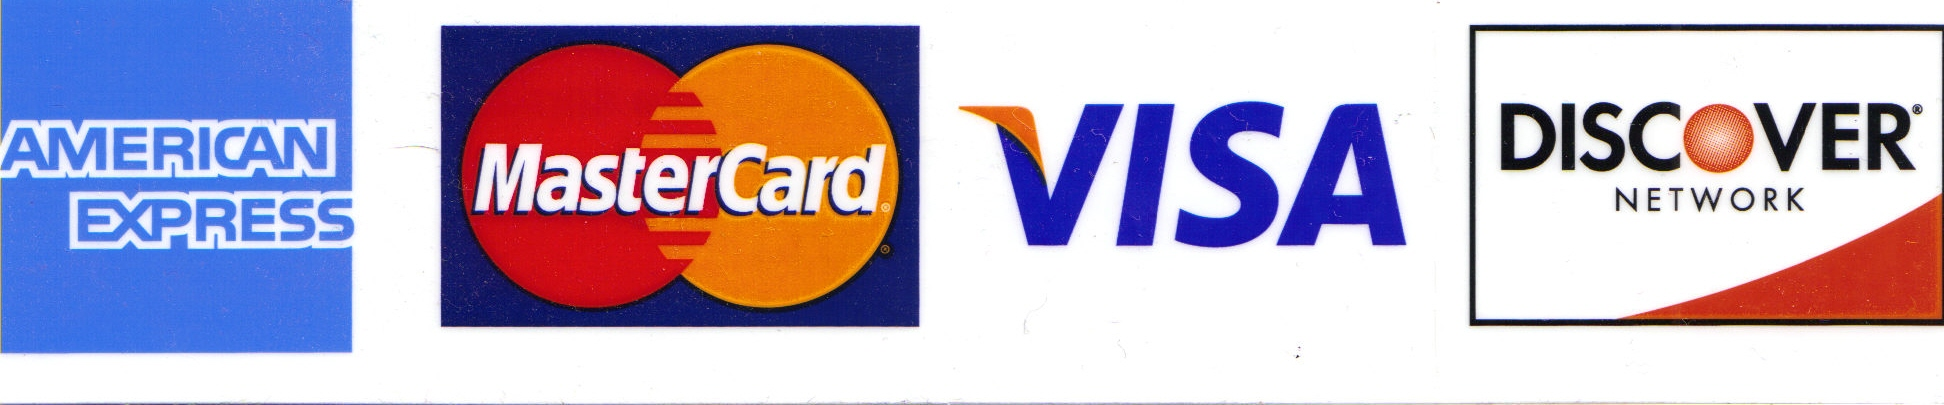 Credit Card Logos Comparison PNG